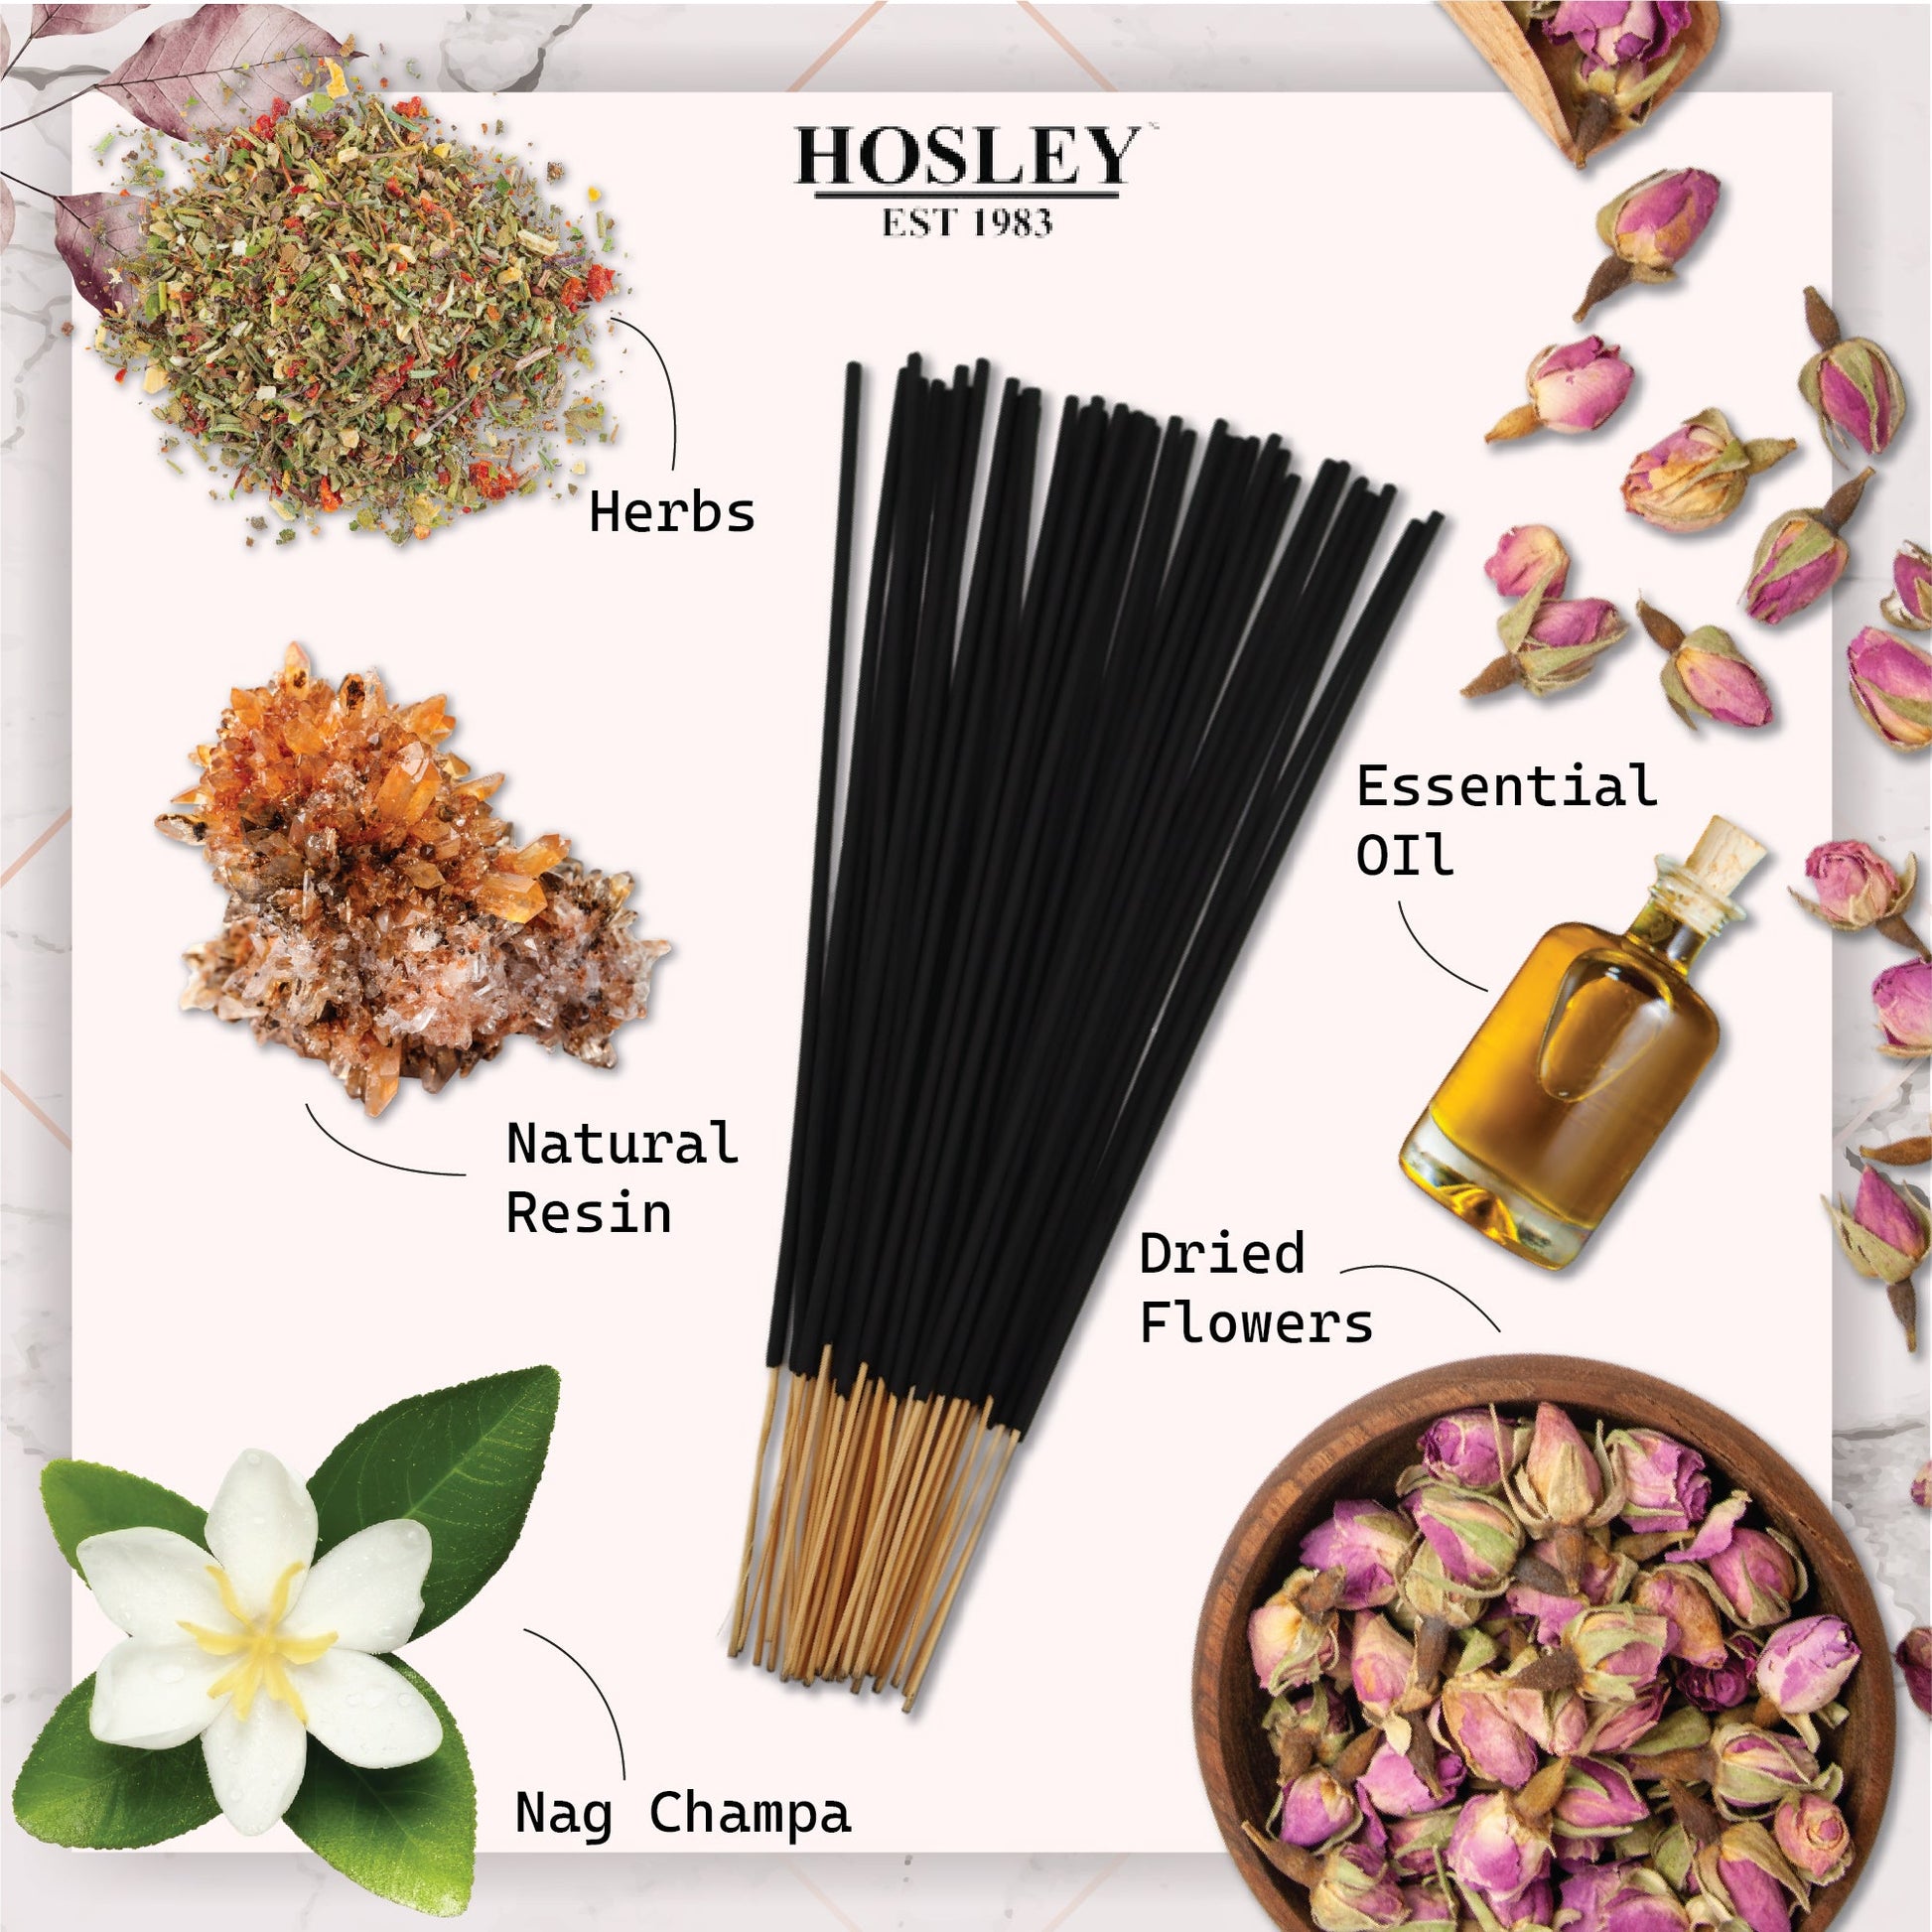 Hosley Nag Champa Fragrance Incense Sticks